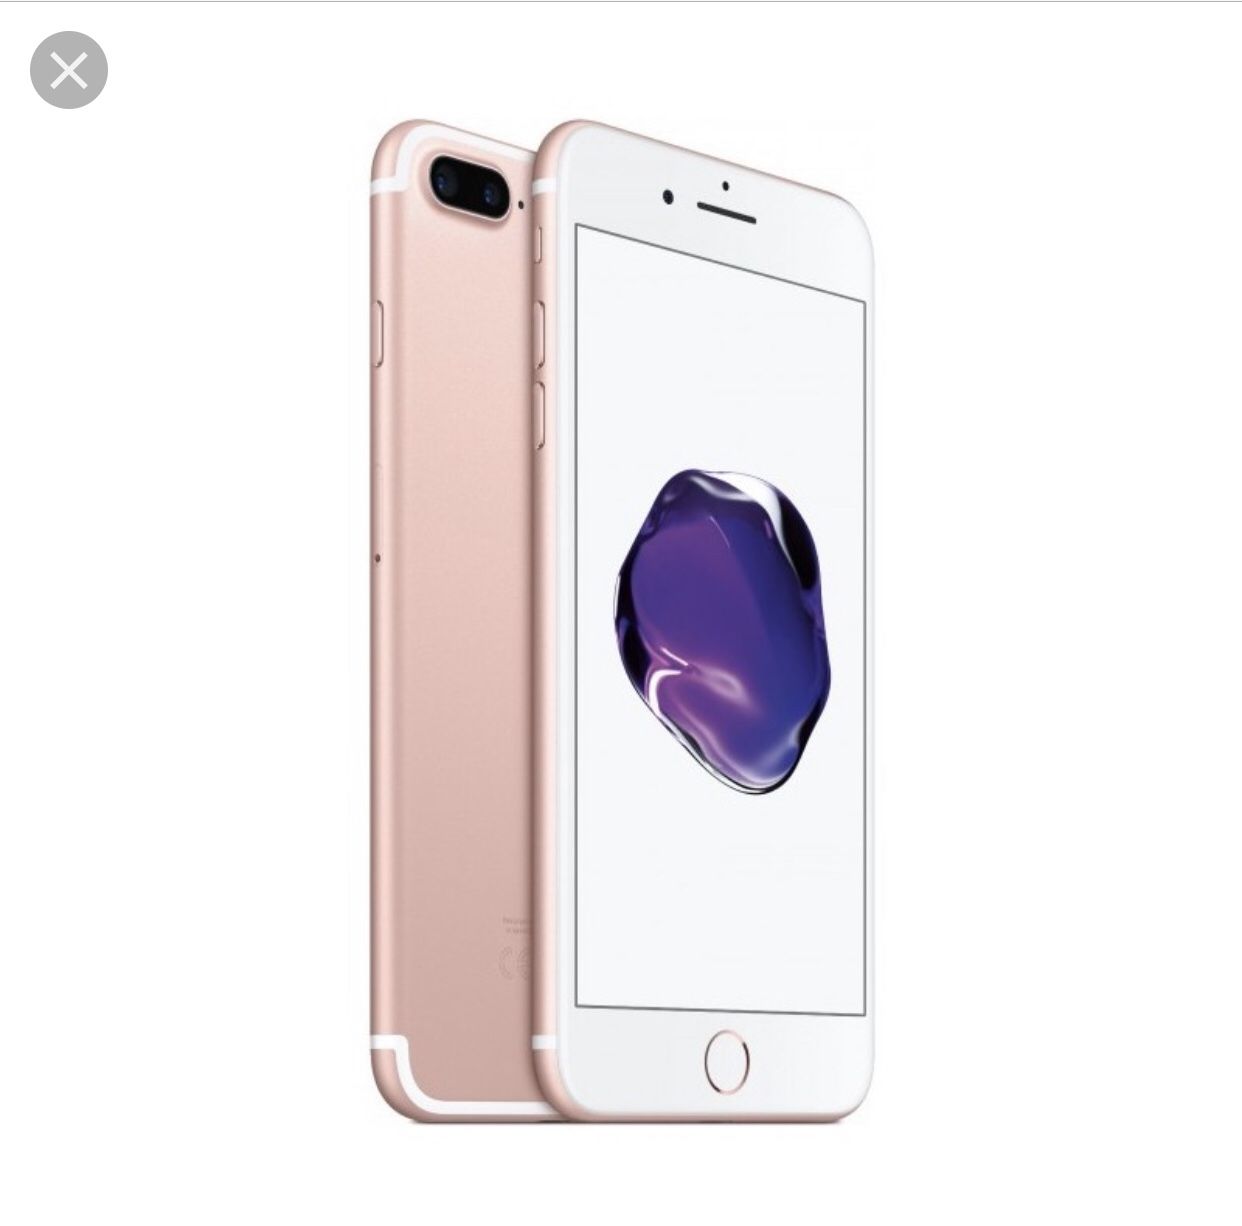 iPhone 7 Plus - Rose Gold 32gb - iCloud Locked